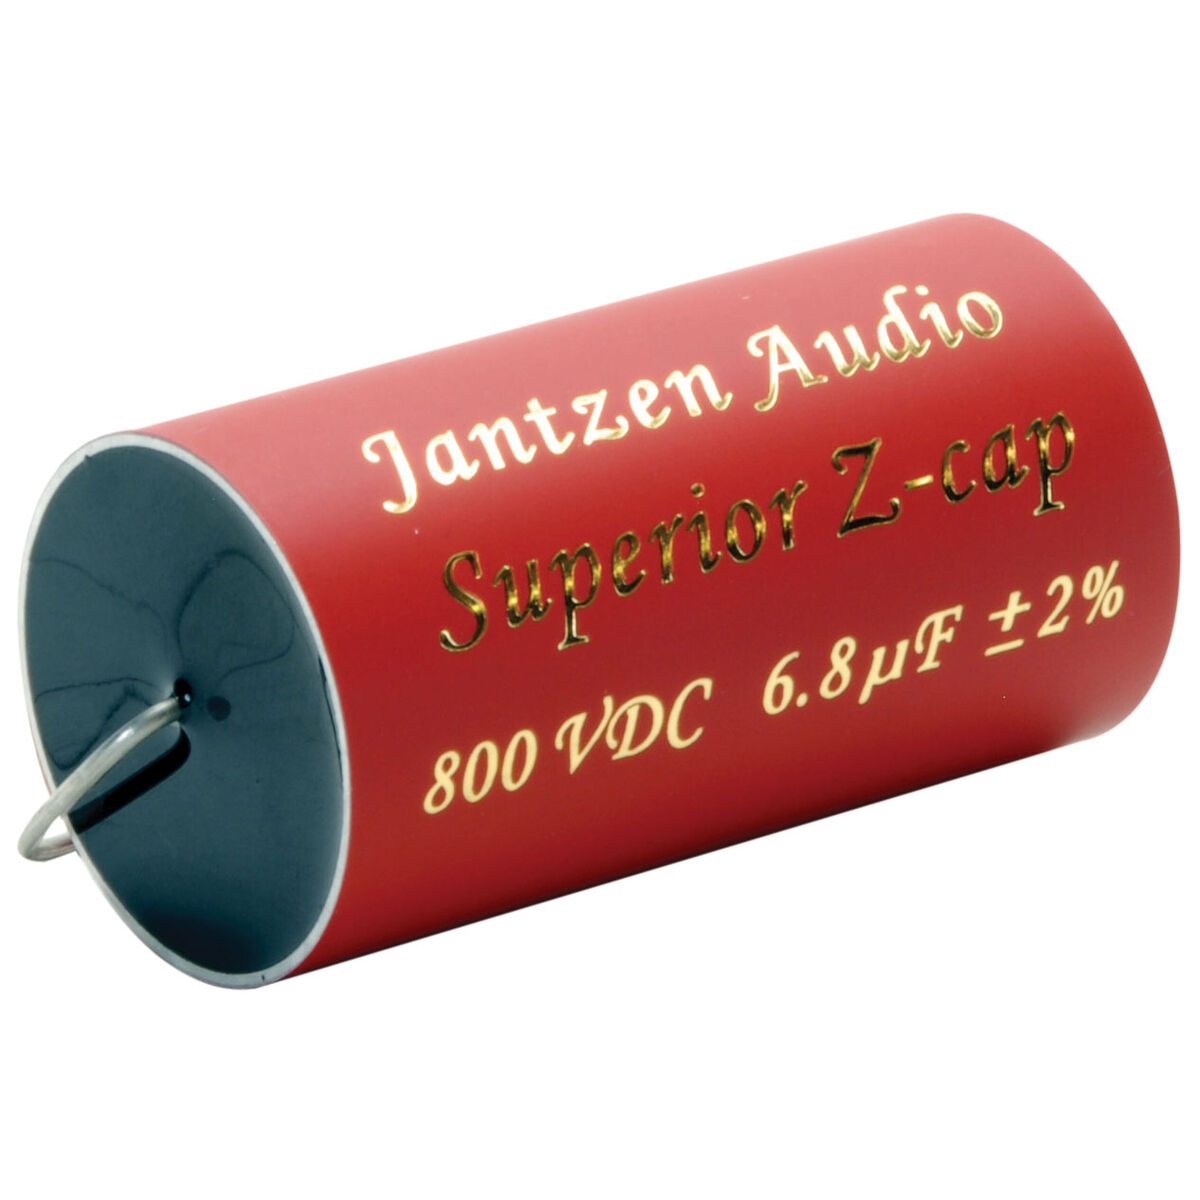 800 VDC HighEnd Jantzen Audio Silver Z-Cap  6.8 uF 